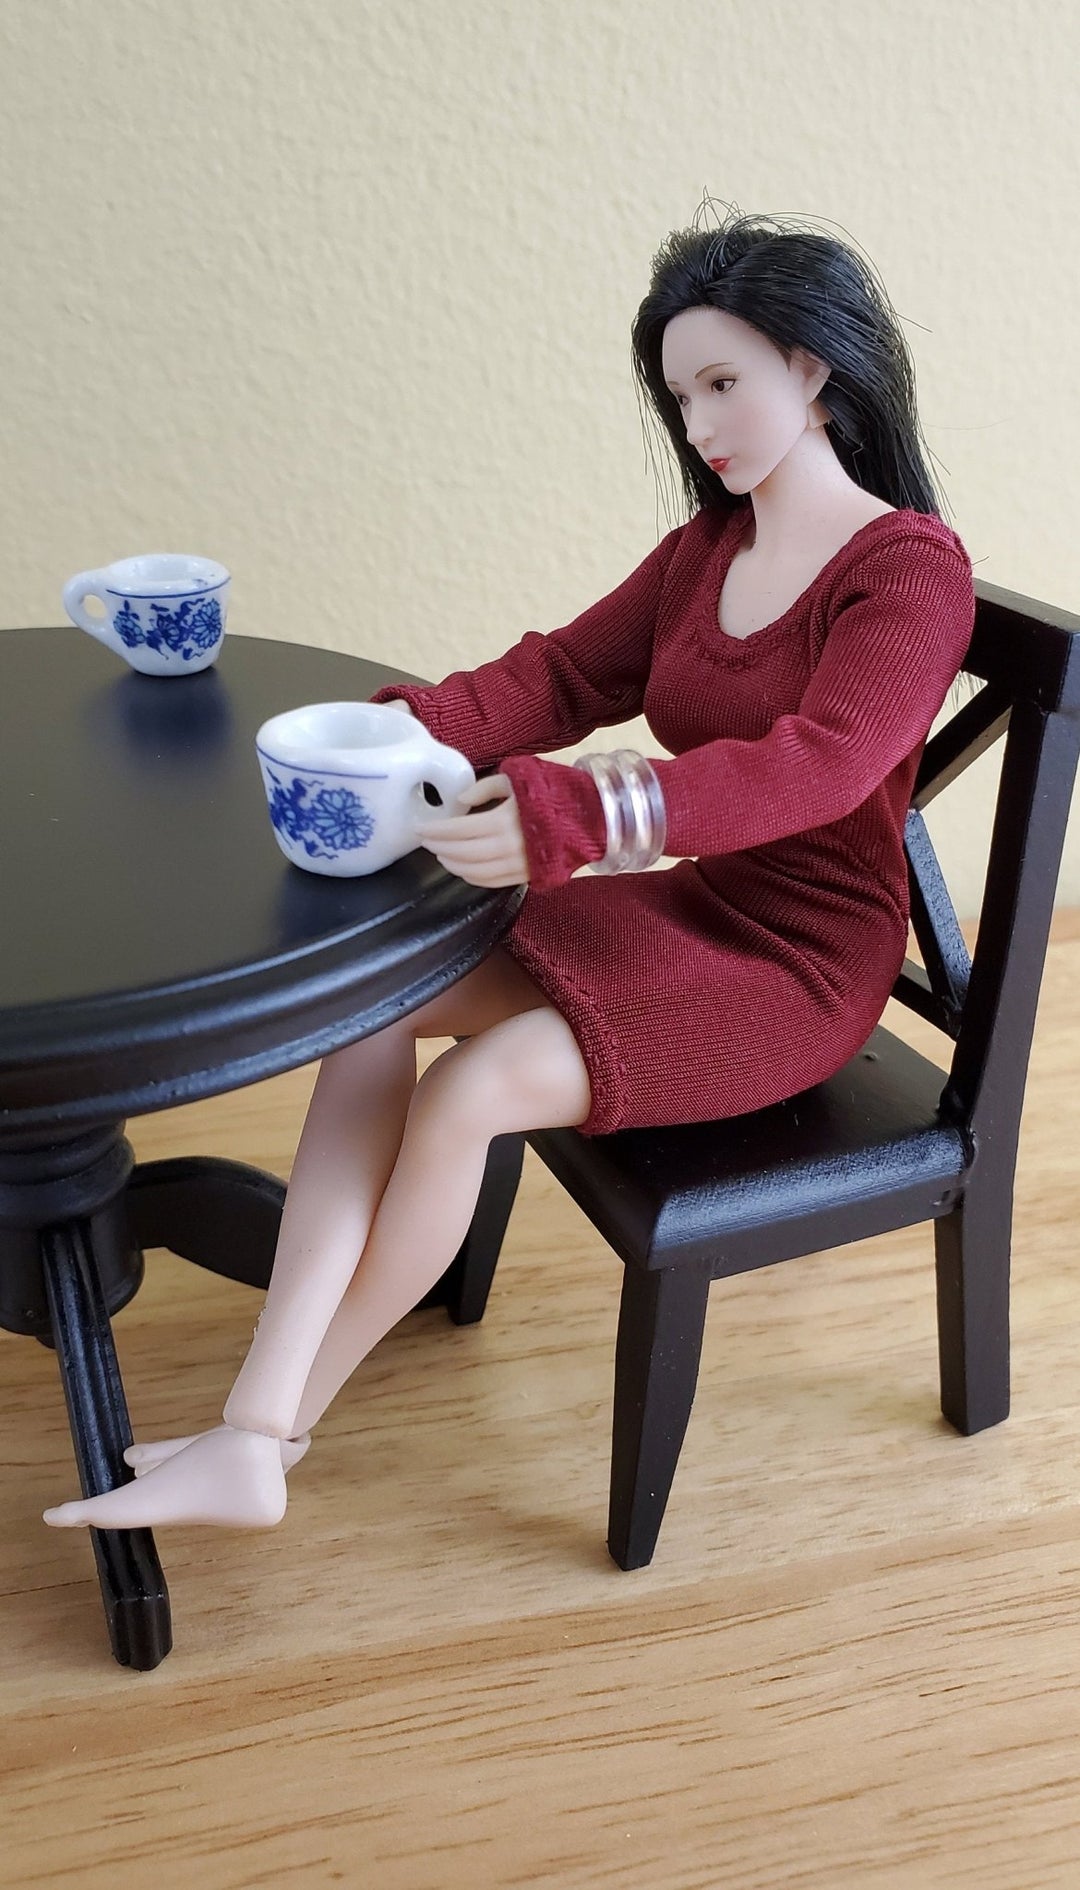 Dollhouse Miniature Coffee Mugs x4 Blue White LARGE 1:12 Scale Kitchen Accessory - Miniature Crush